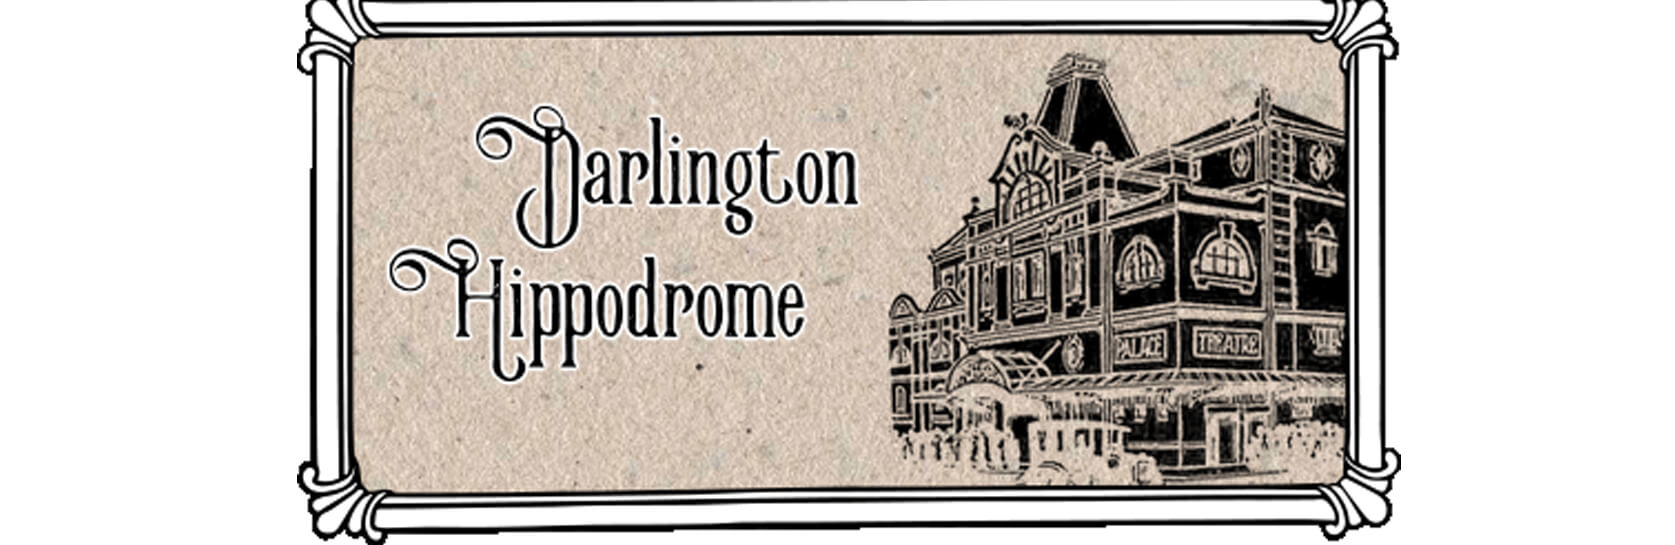 Darlington Hippodrome Teacher Notes - Topic 2 - Darlington Hippodrome